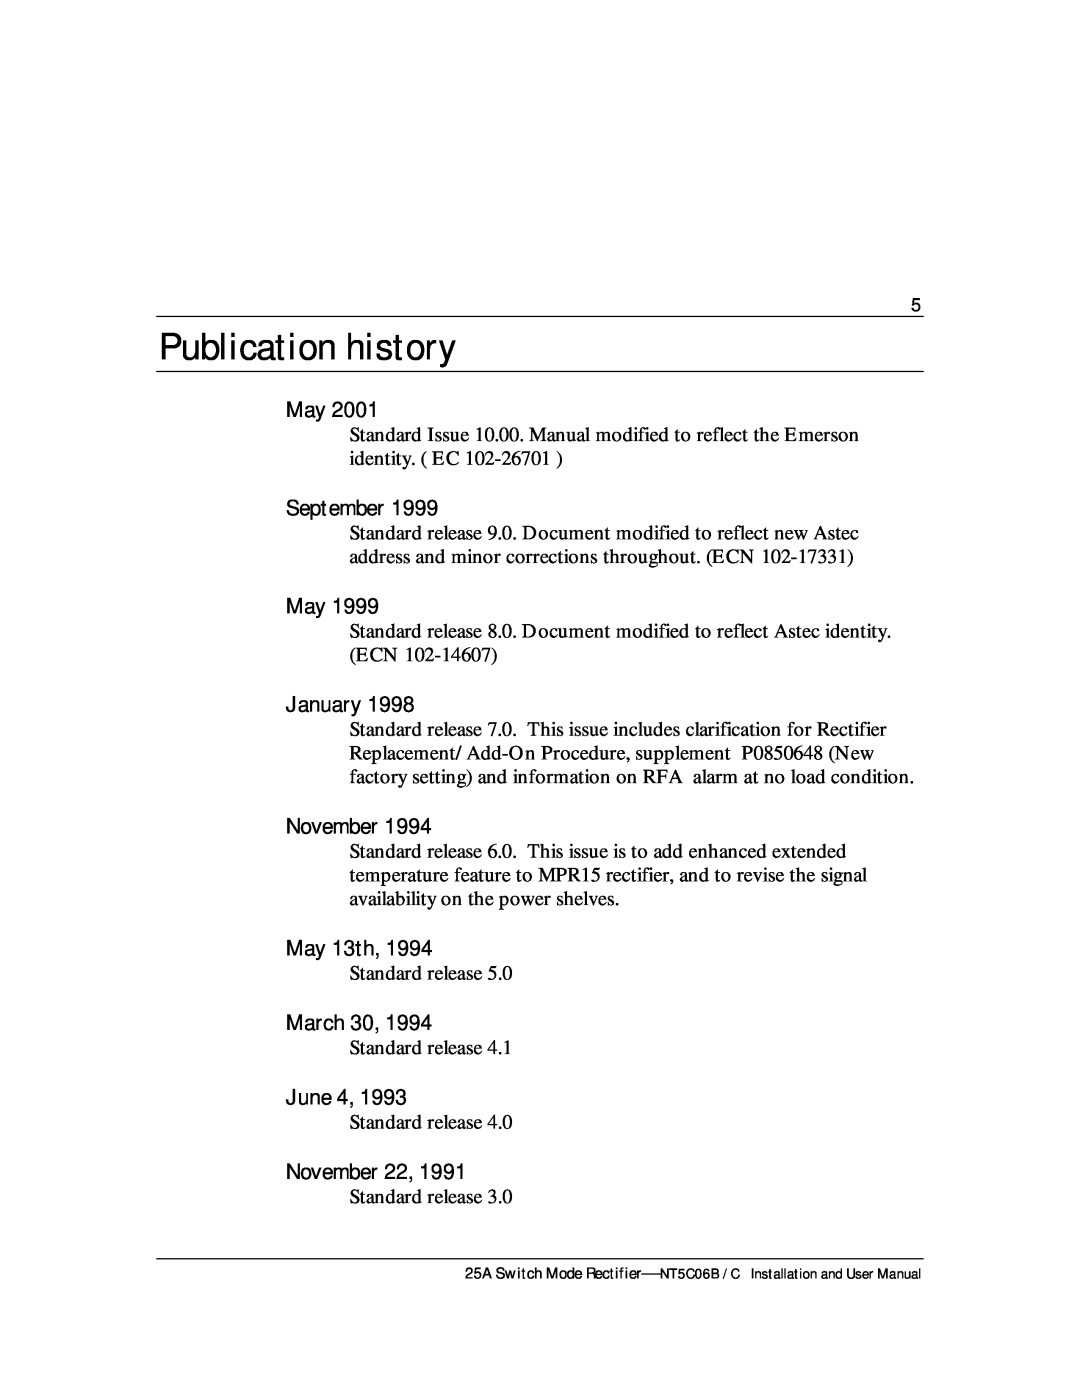 Emerson MPR25, MPR15 Series user manual Publication history, September, January, May 13th, March 30, June 4, November 22 